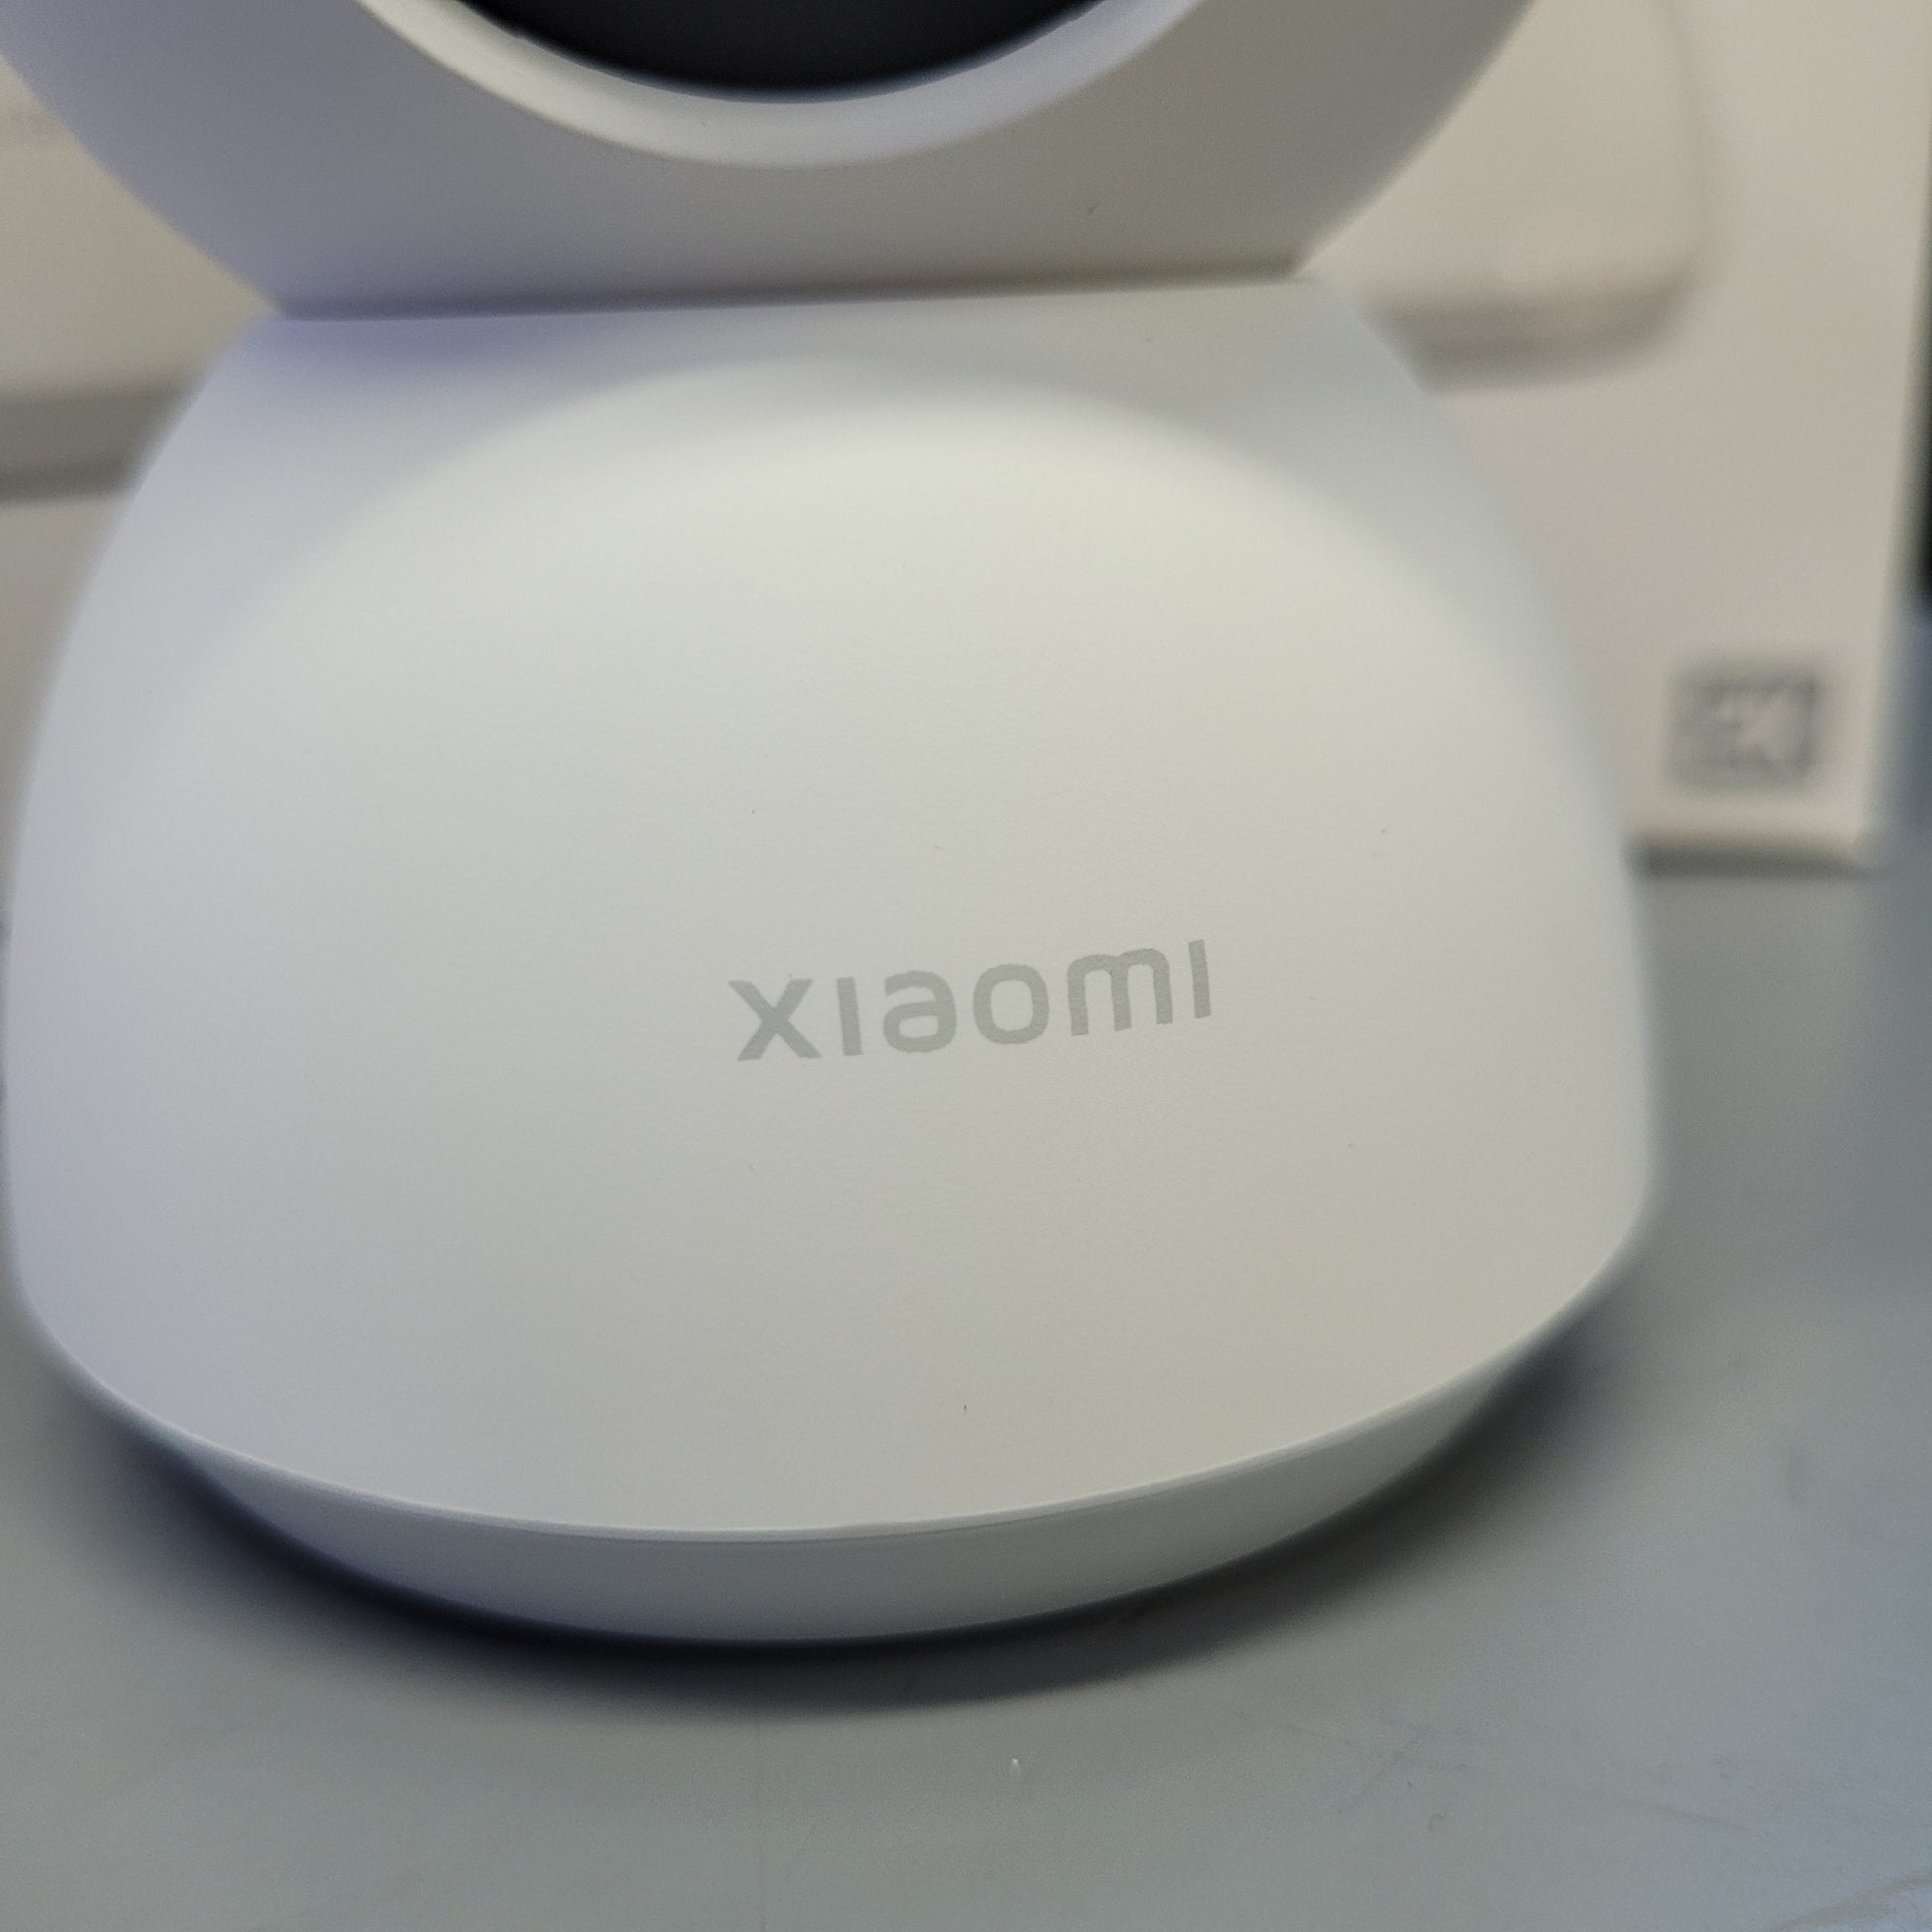 XIAOMI SMART CAMERA C300 - Premium Camaras de Xiaomi - Solo $94187.50! Compra ahora Web3Arg